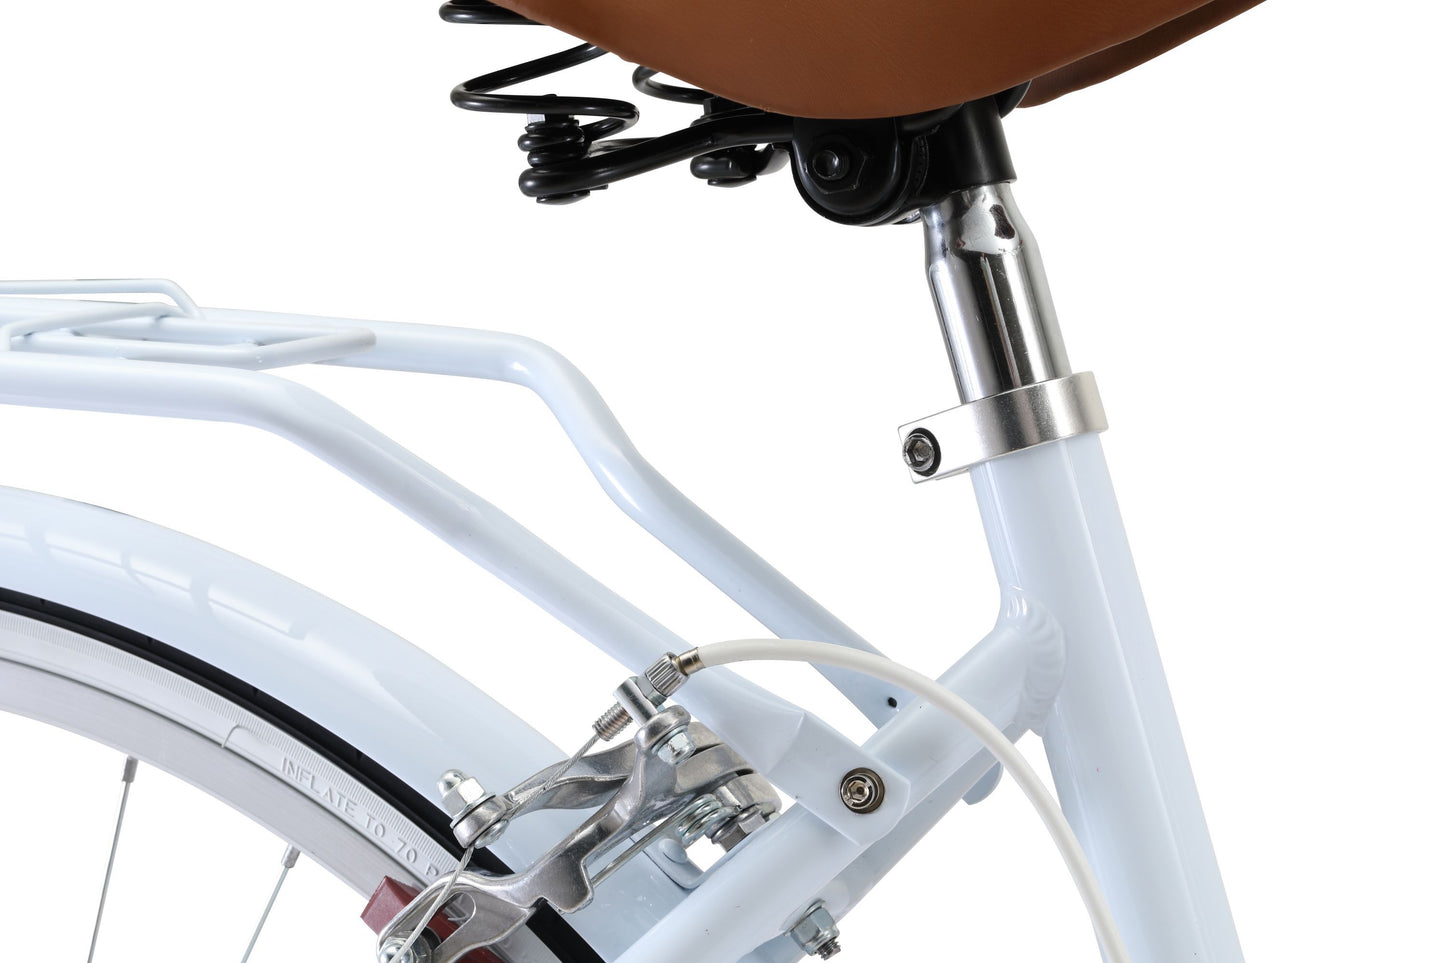 Ladies Lite Vintage Bike in white showing rear Dual -Pivot Caliper brakes from Reid Cycles Australia